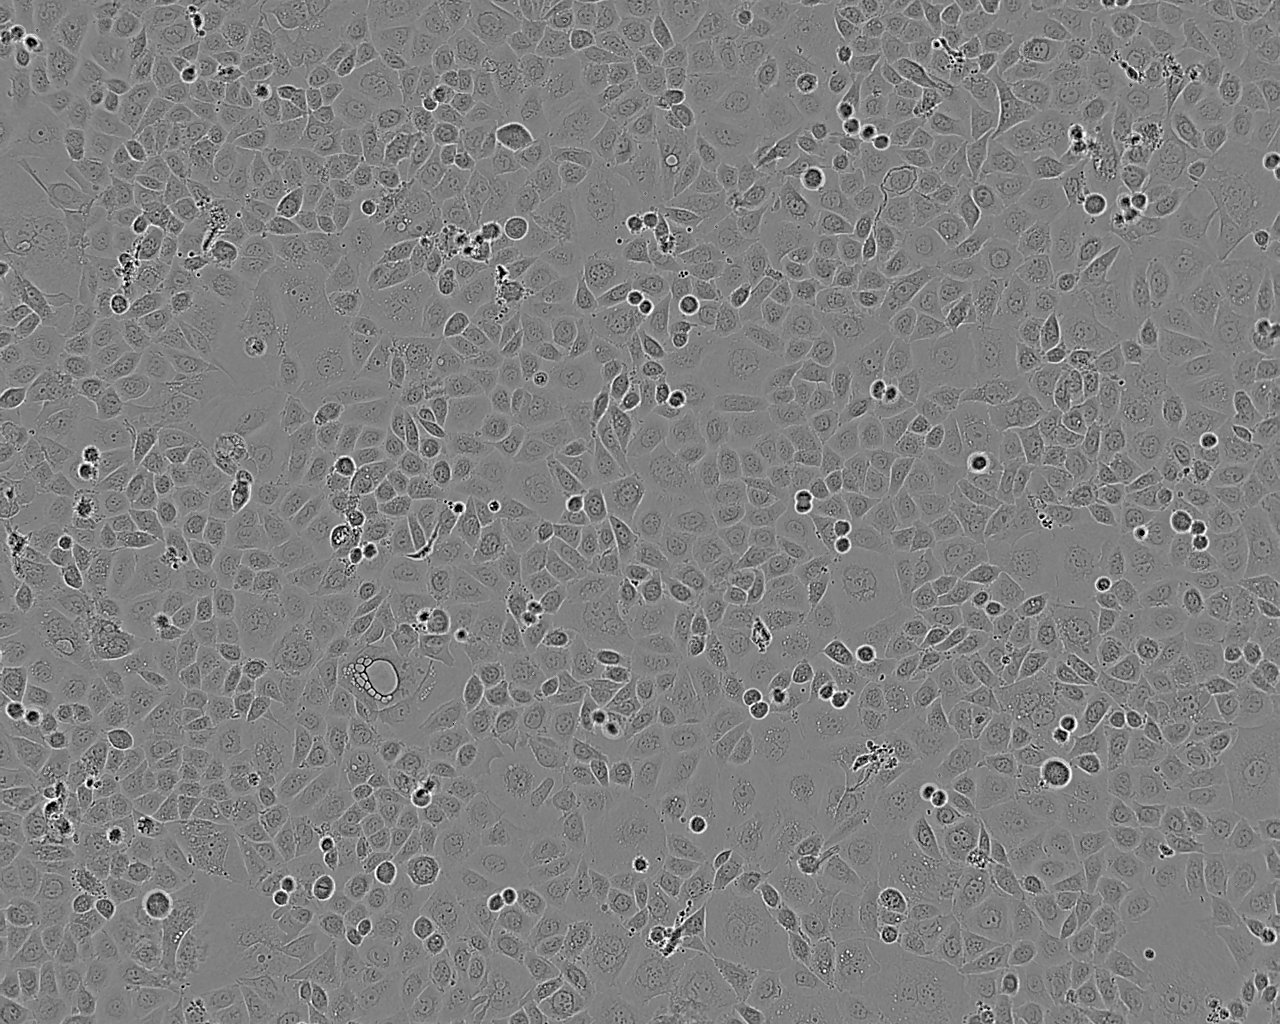 ATDC-5 小鼠胚胎瘤细胞系,ATDC-5